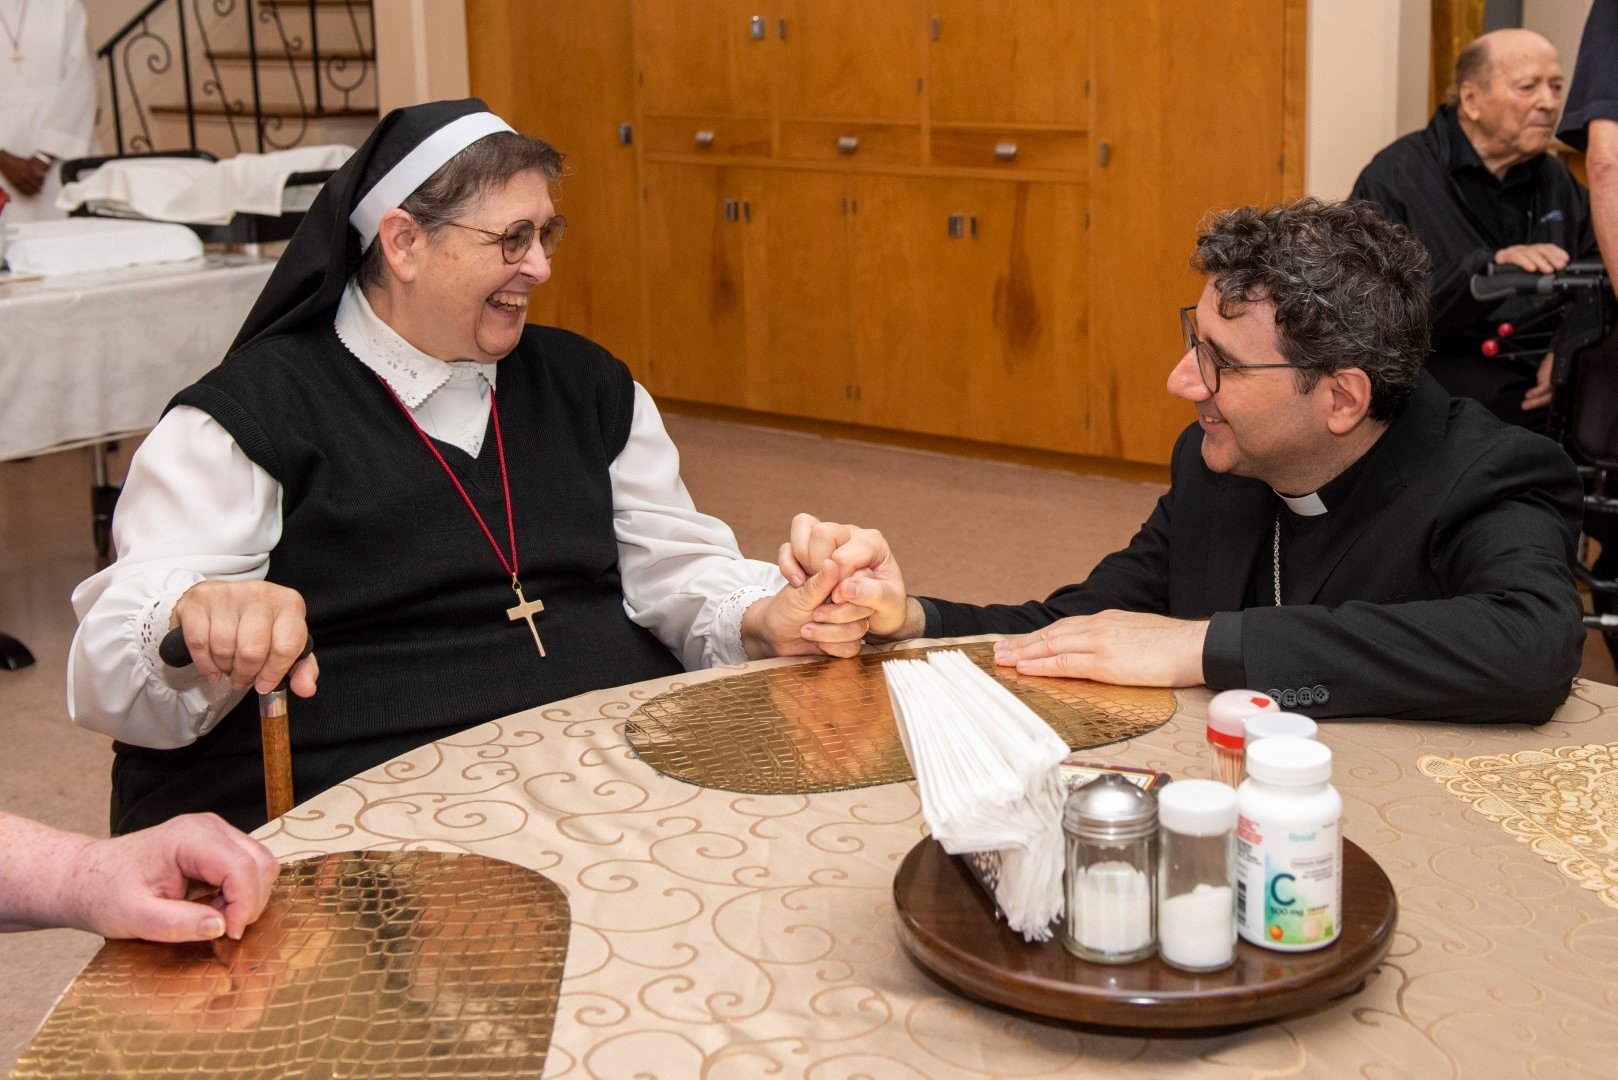 Archbishop Leo Visits St. Bernard’s Residence